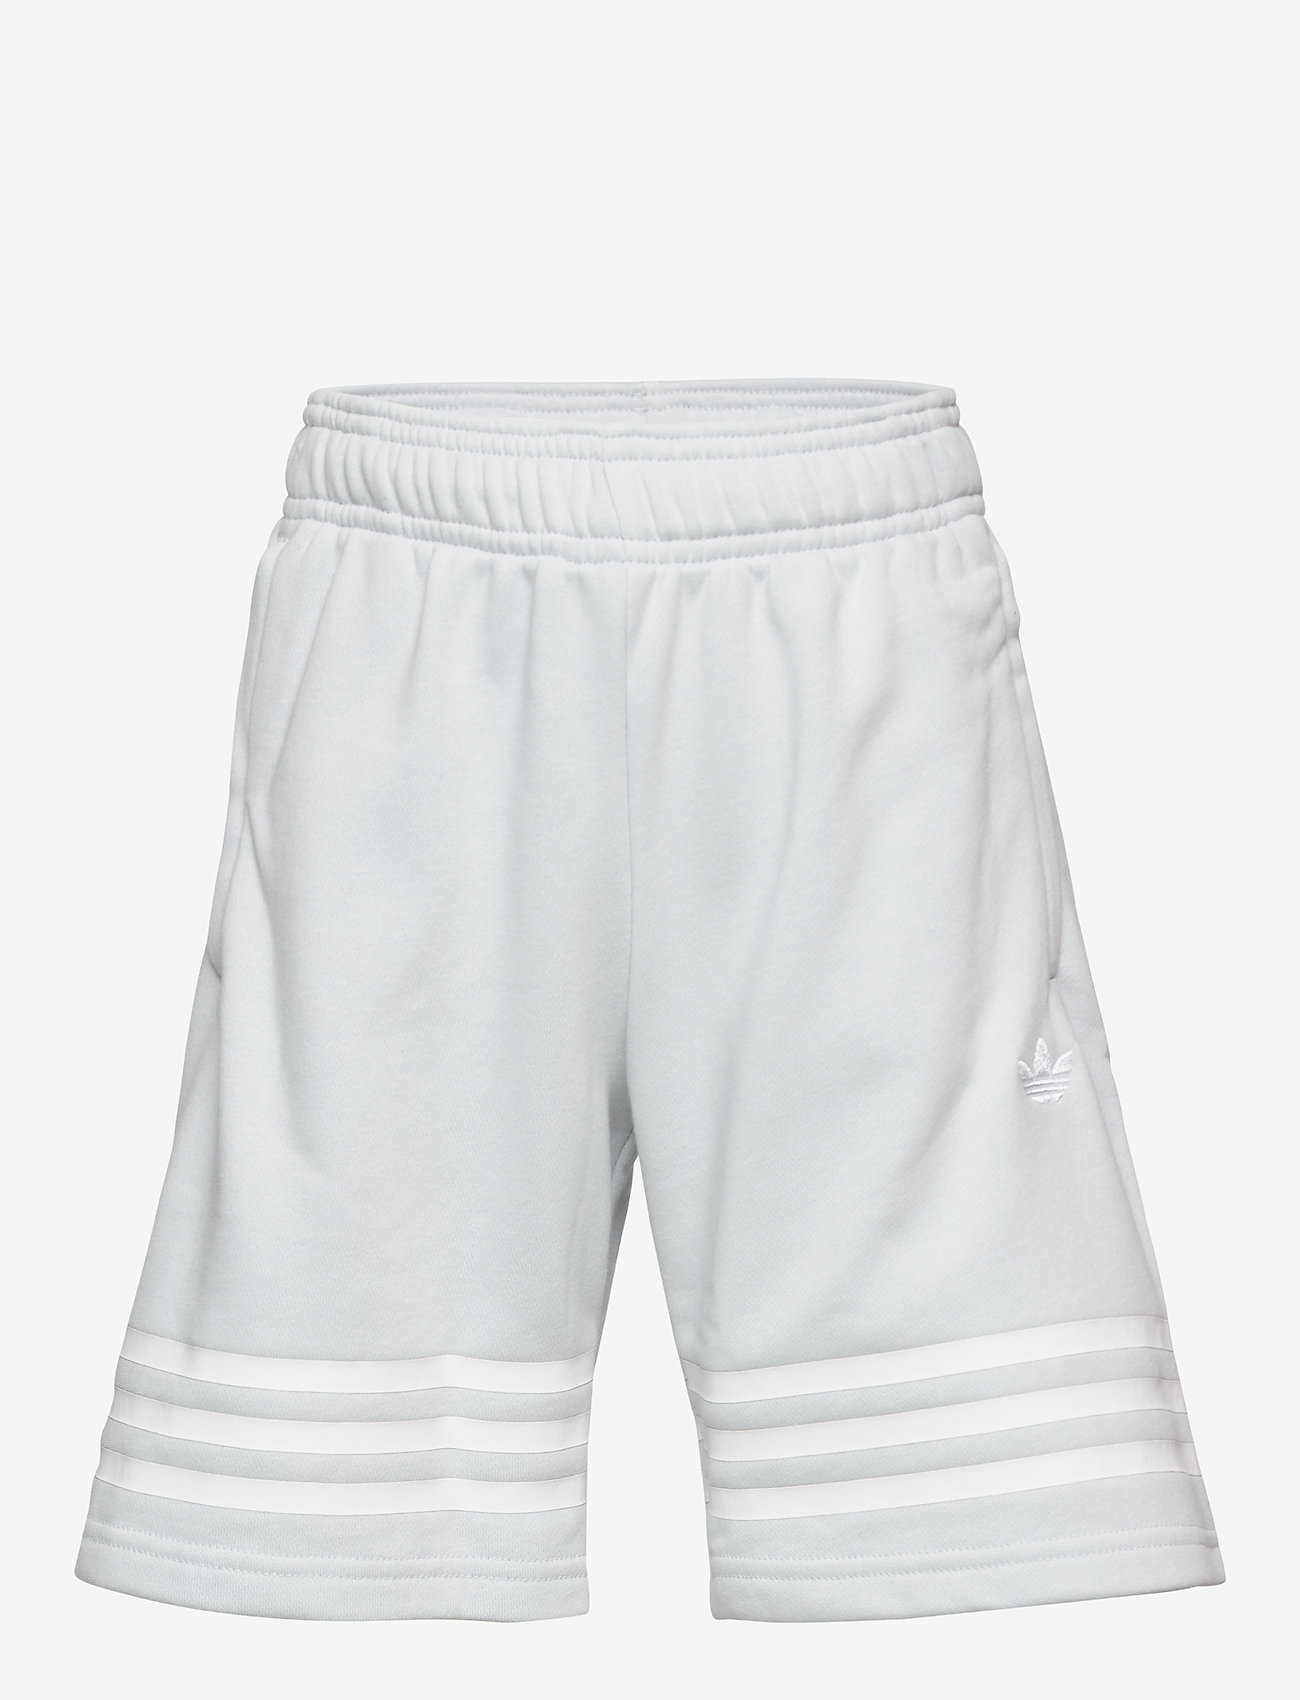 adidas men's outline shorts